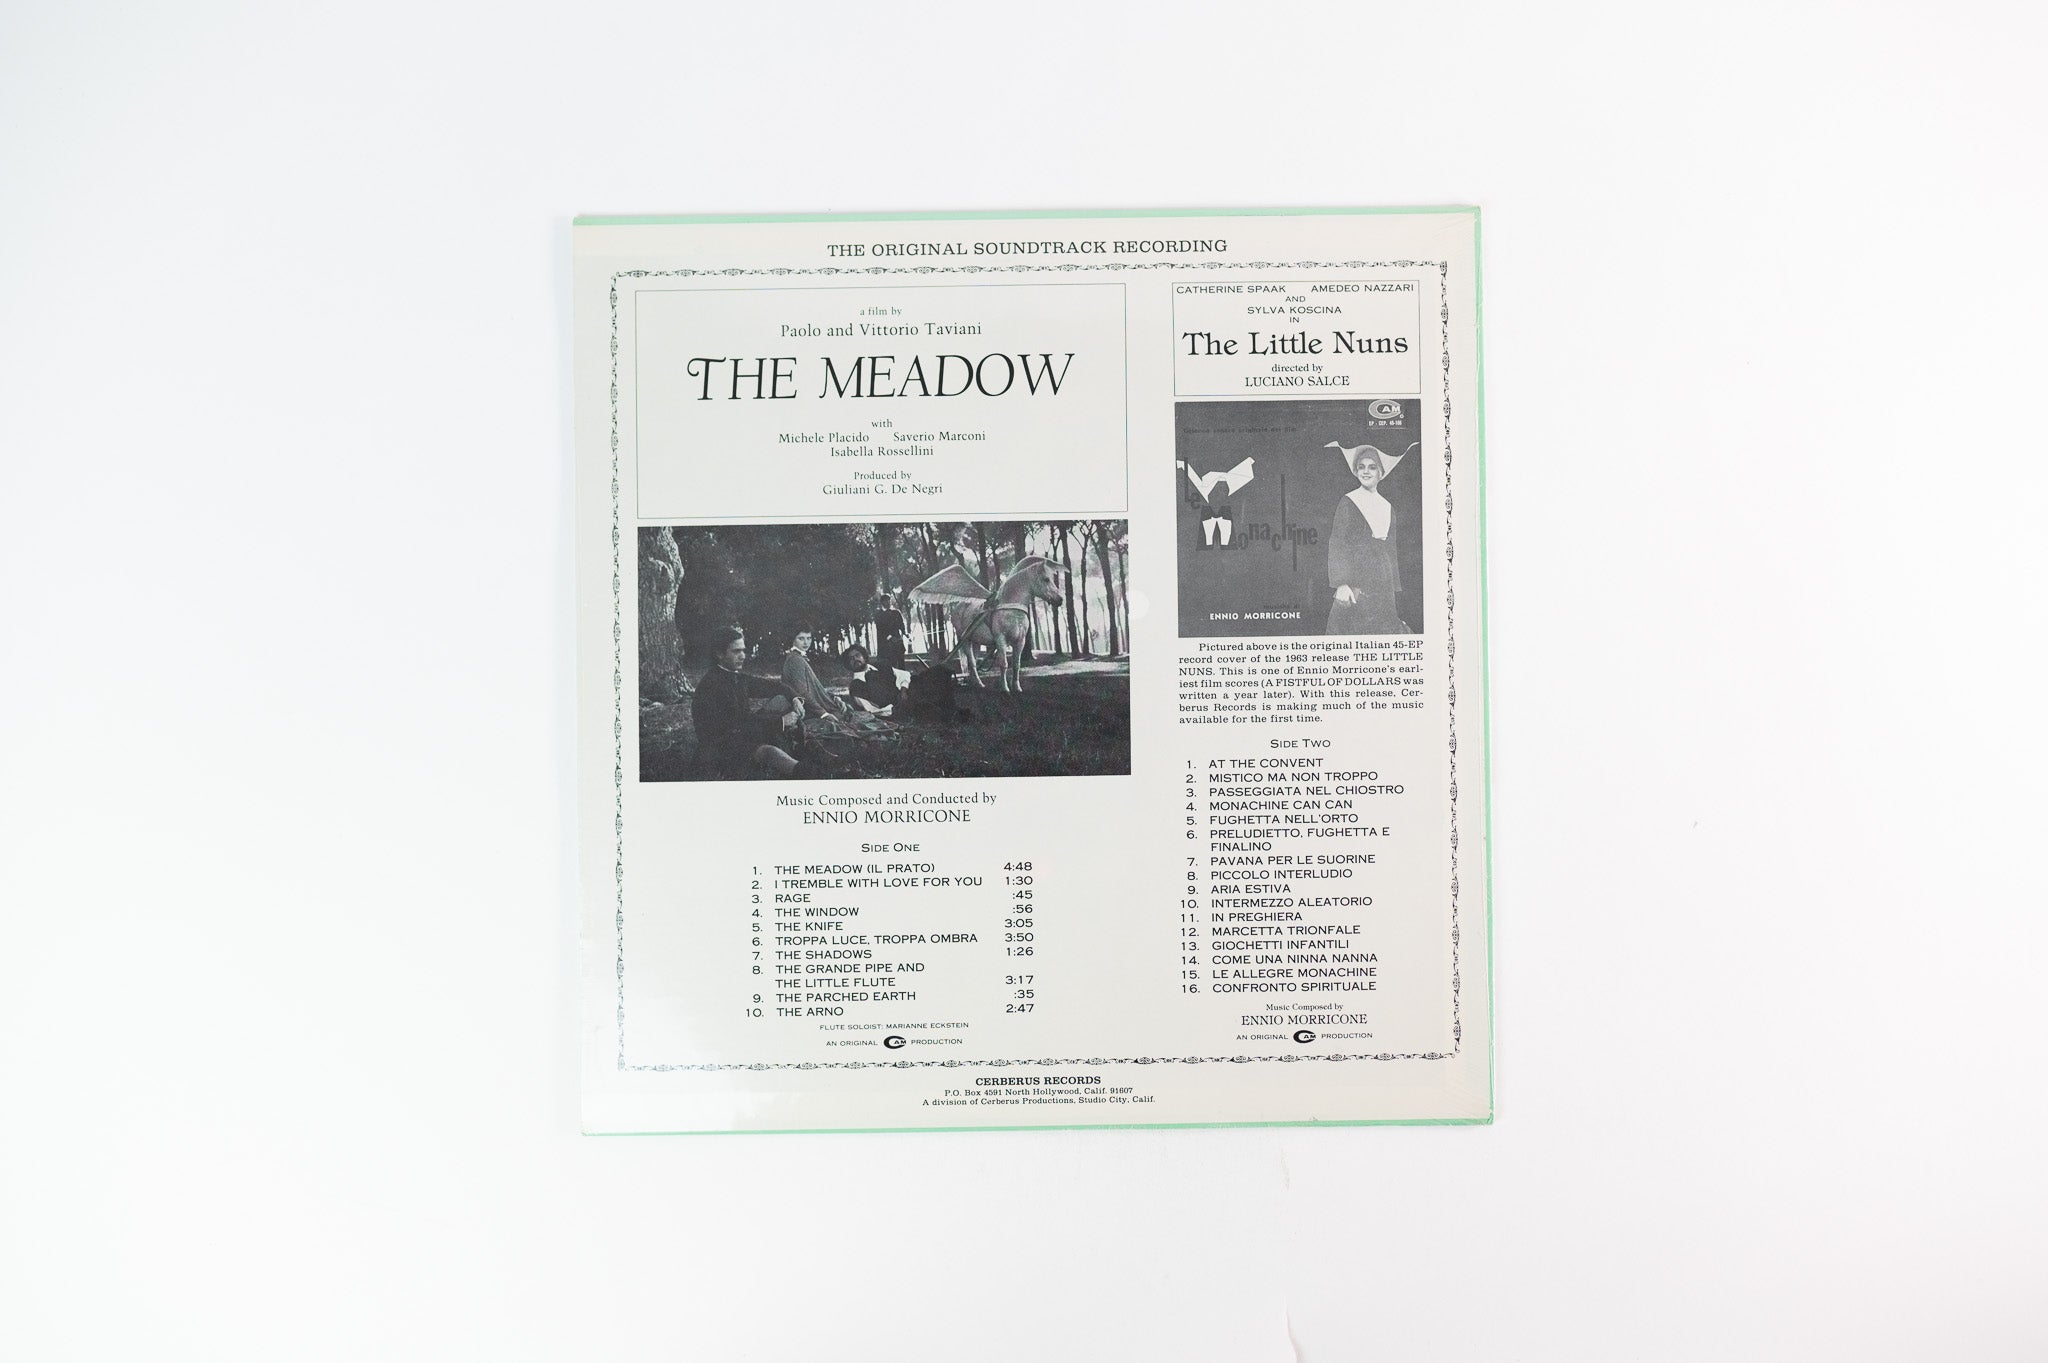 Ennio Morricone - The Meadow / The Little Nuns (Original Soundtrack Recordings) on Cerberus Sealed